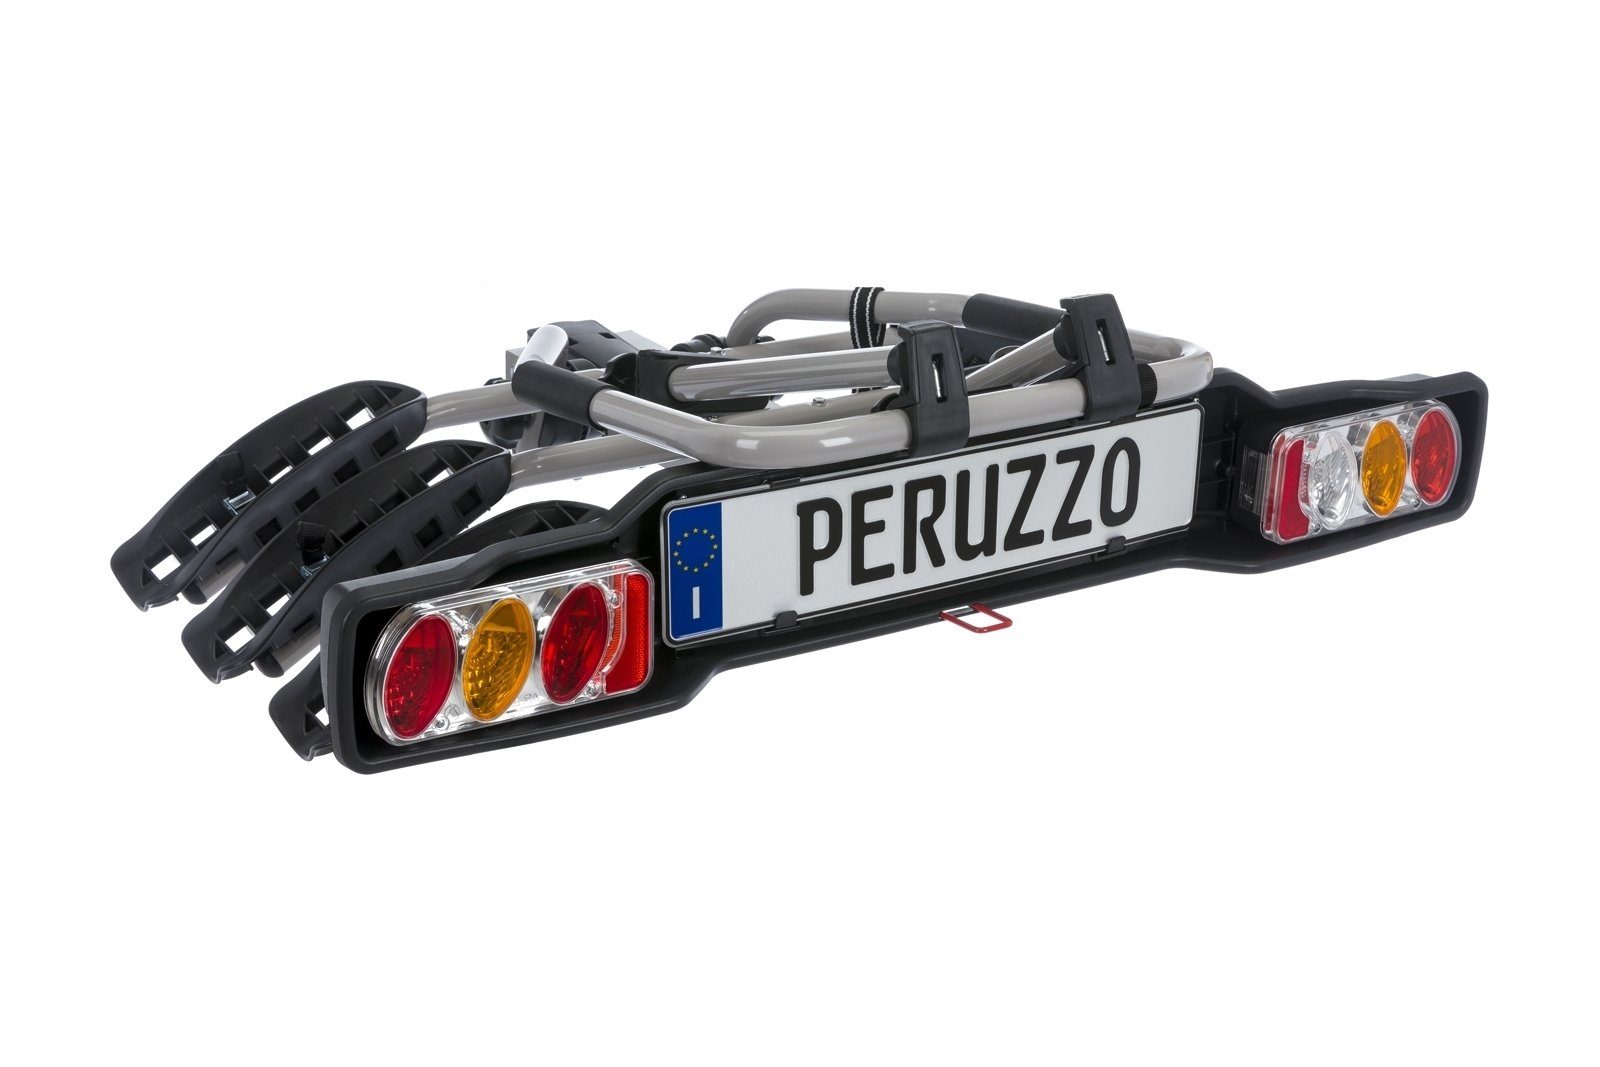 aus PERUZZO 3 Fahrradträger (14,74kg) Stahl Kupplungsfahrradträger Peruzzo für SIENA